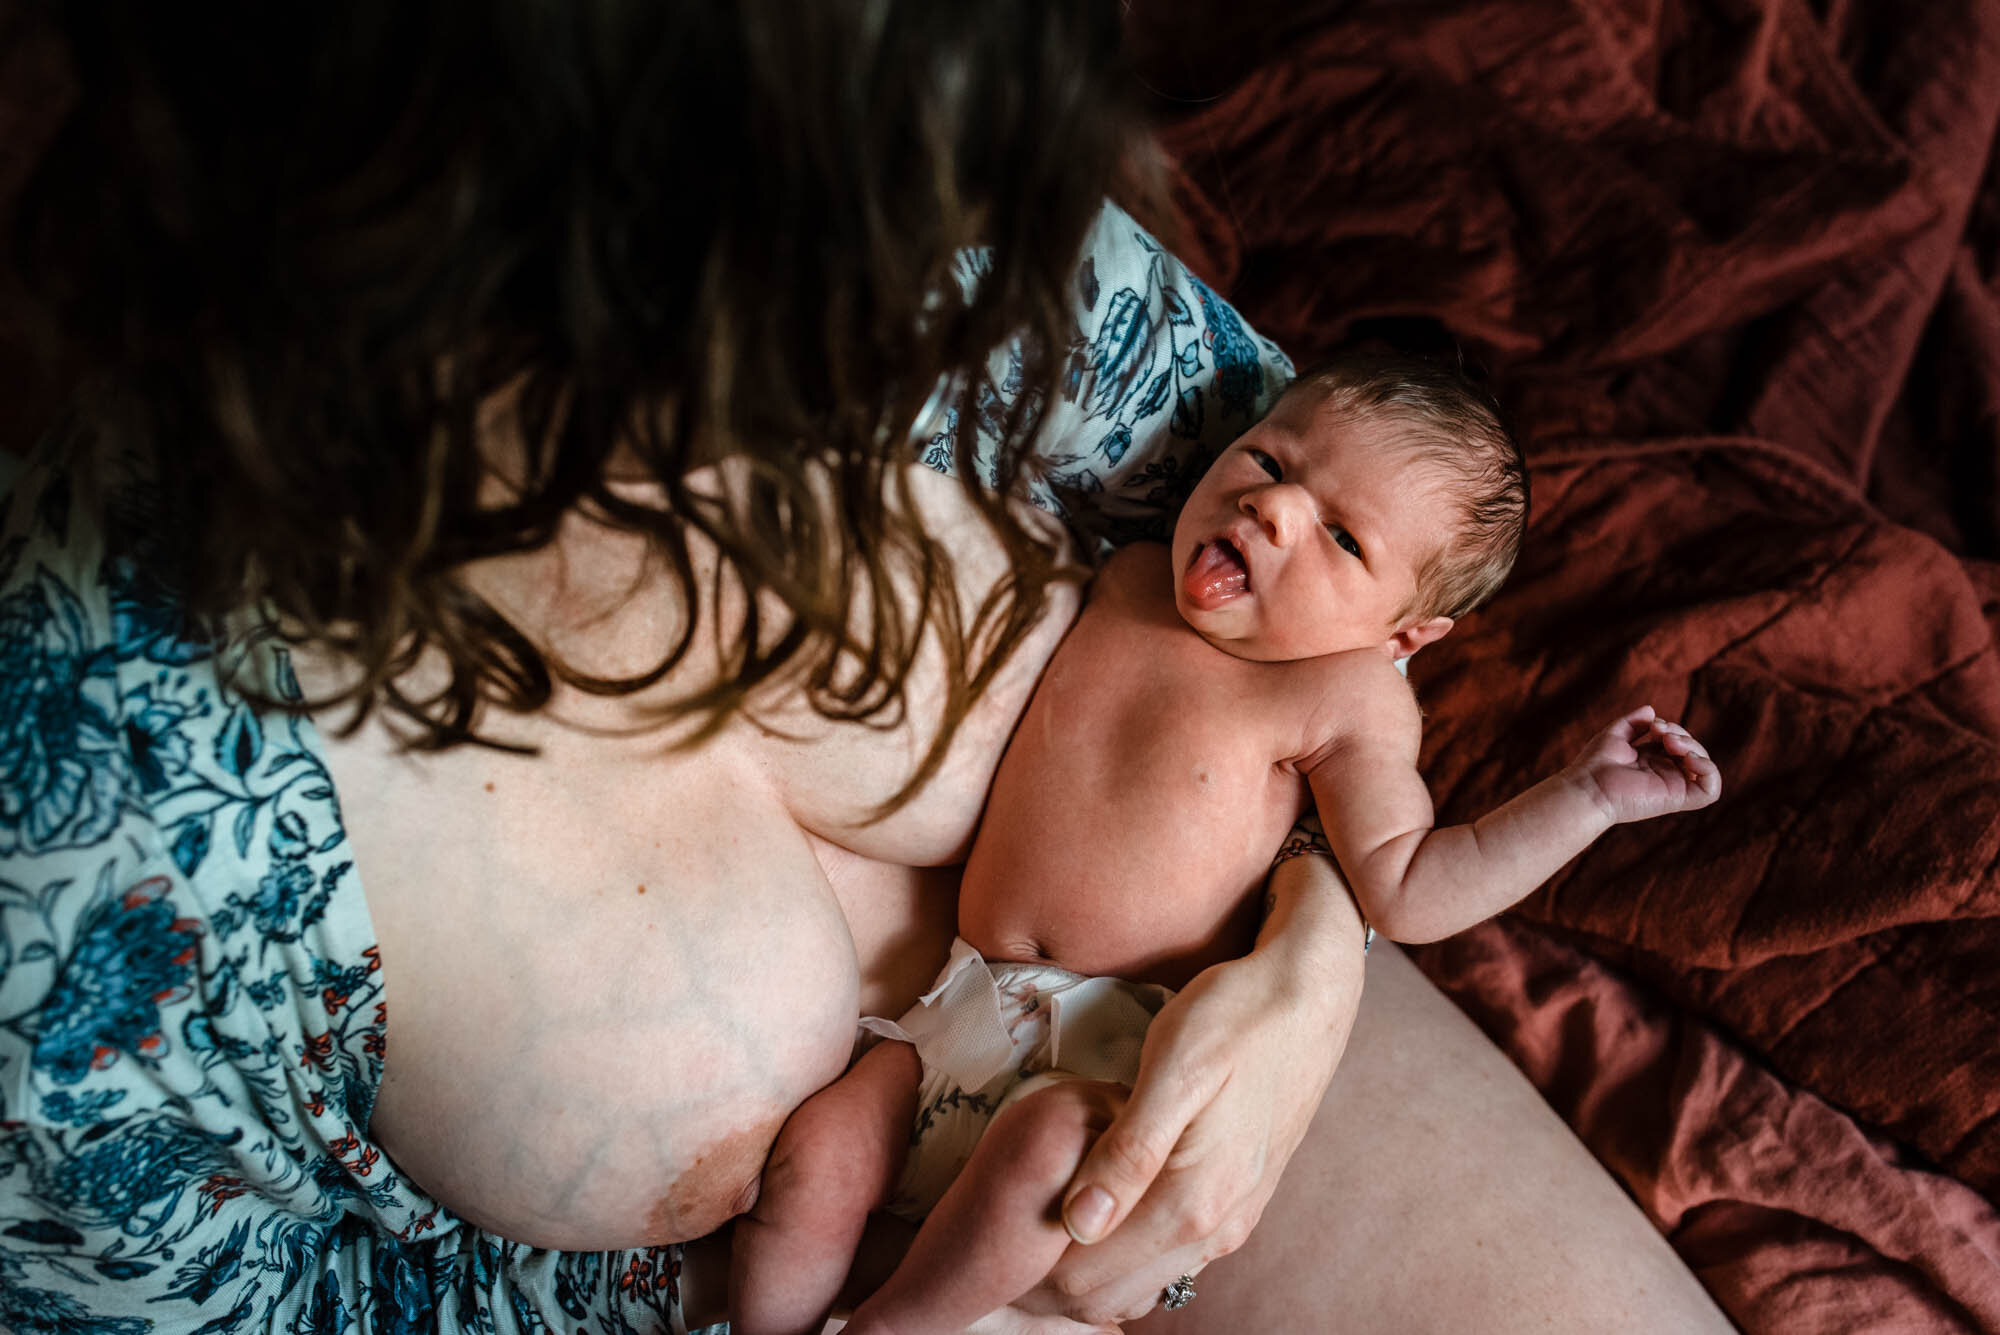 Minneapolis Birth Photography - Gather Birth Cooperative07052021085950.jpg